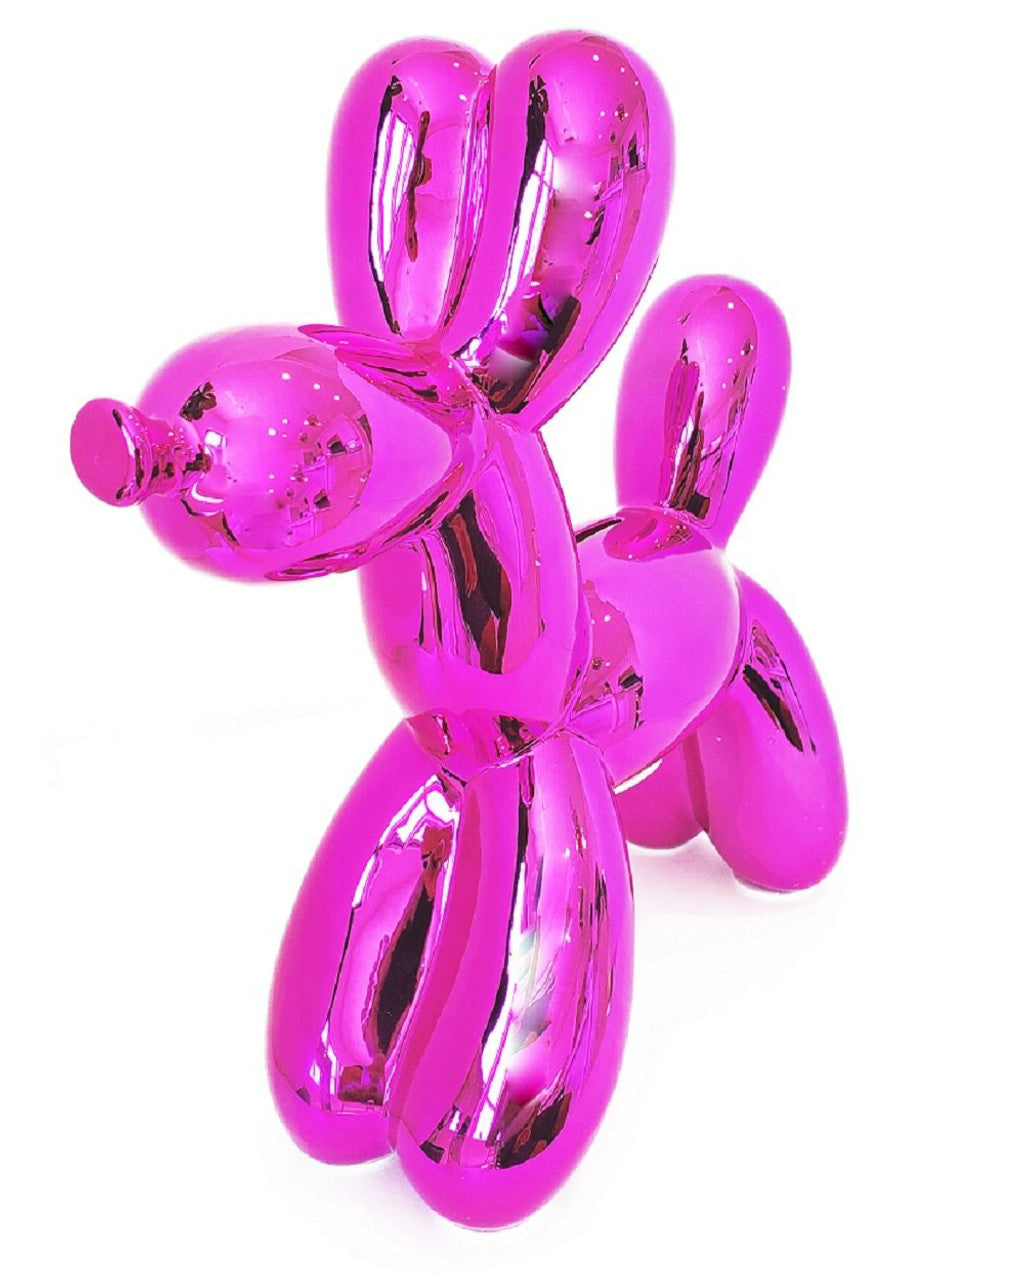 Hot Pink Ceramic Balloon Dog Piggy Bank - 12" tall